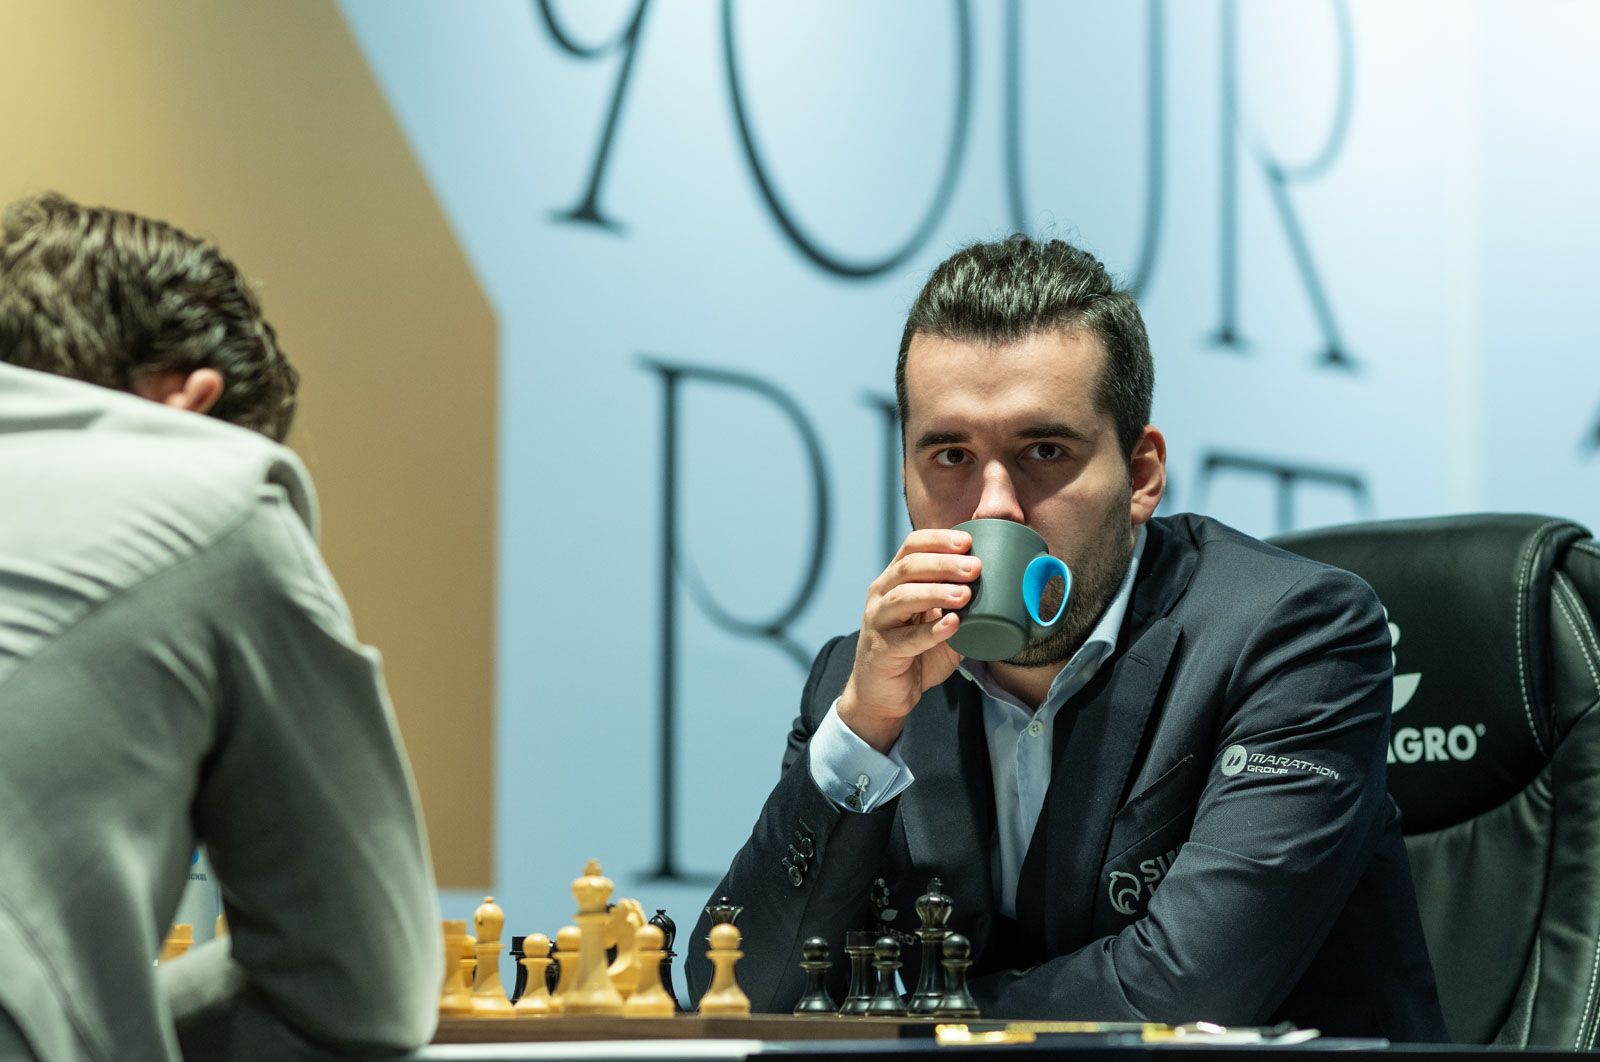 Mundial de Xadrez da FIDE 2021: Carlsen vs Nepomniachtchi 